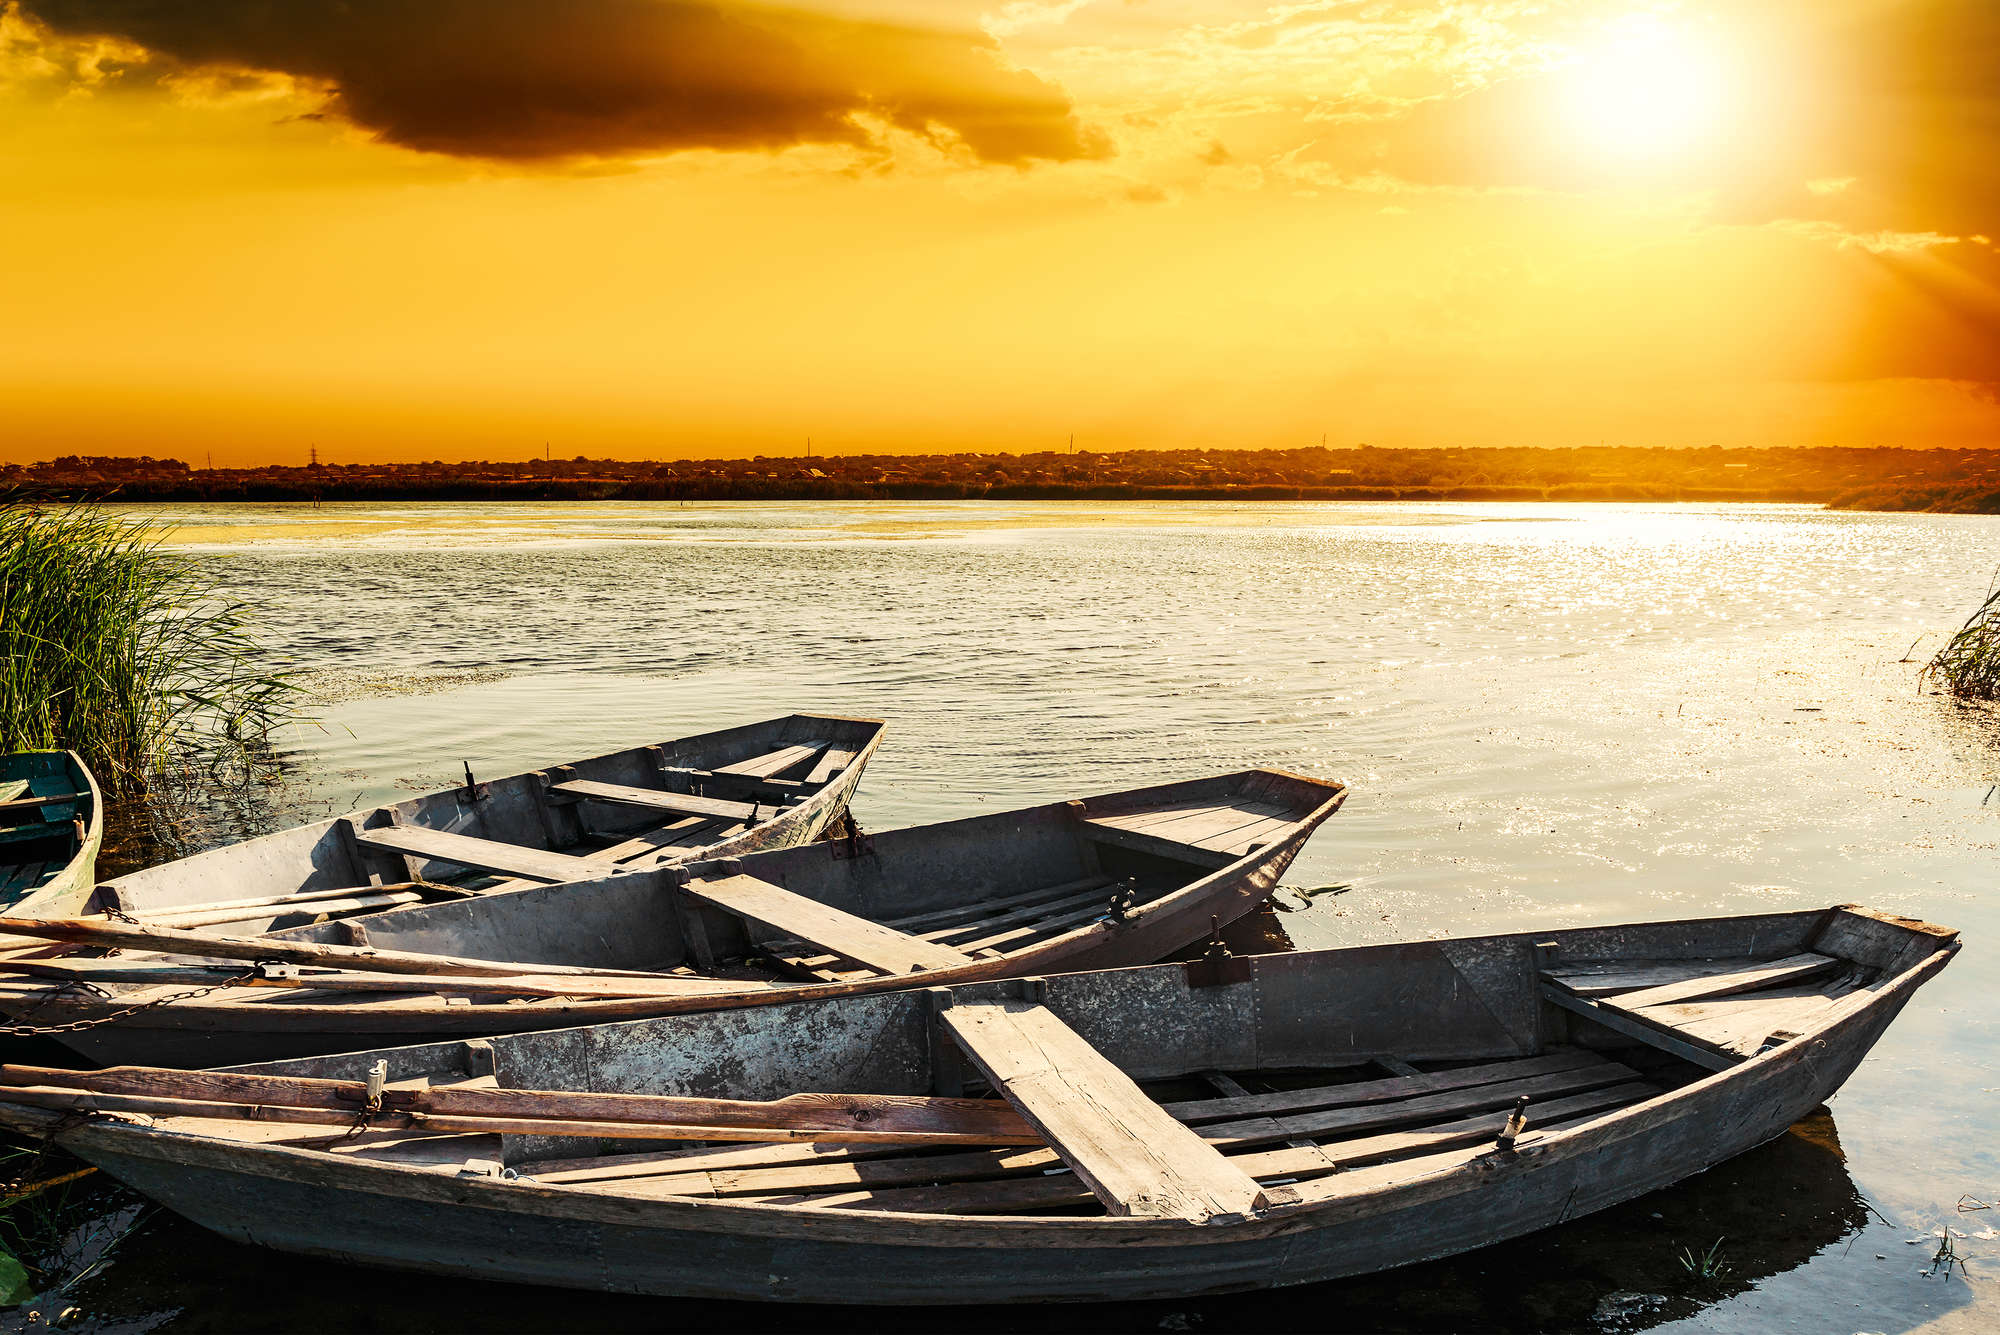             Natur Fototapete Holzboote am See auf Perlmutt Glattvlies
        